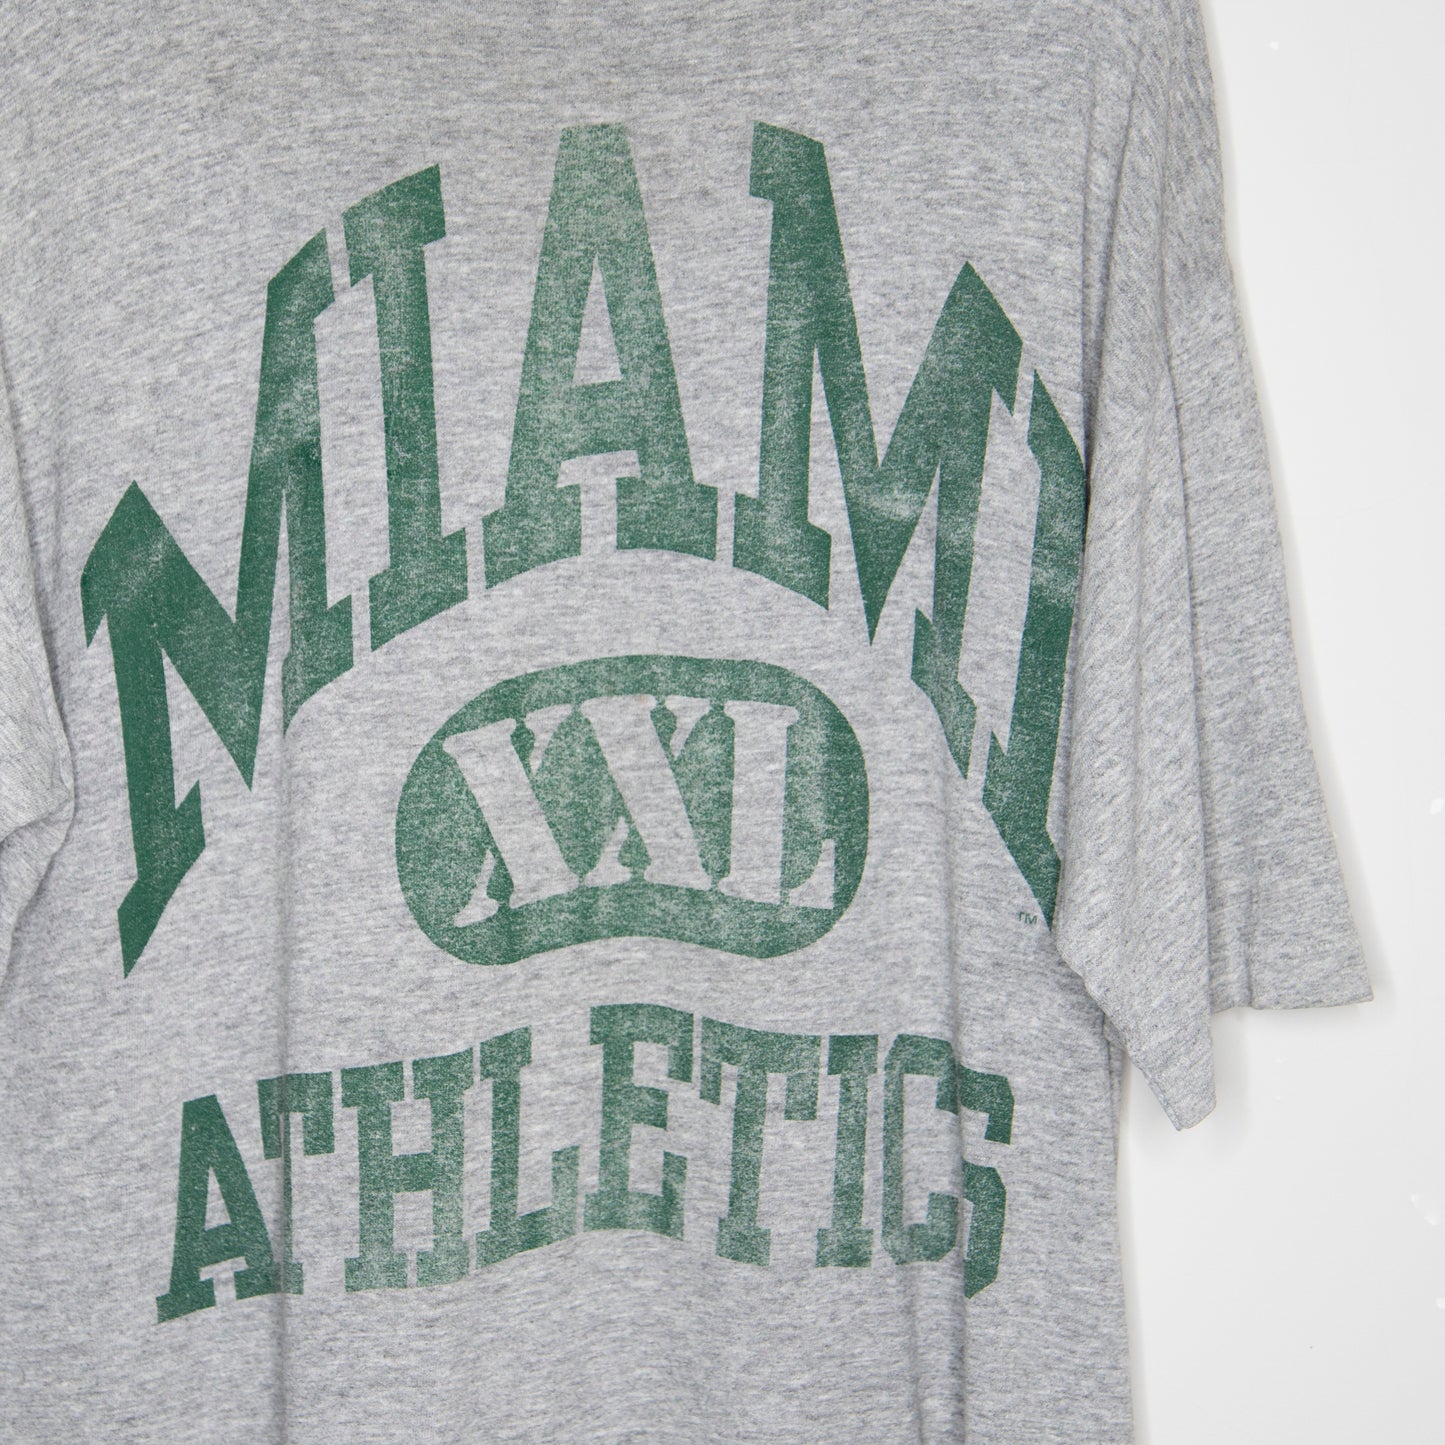 90's Miami Athletics T-Shirt XL